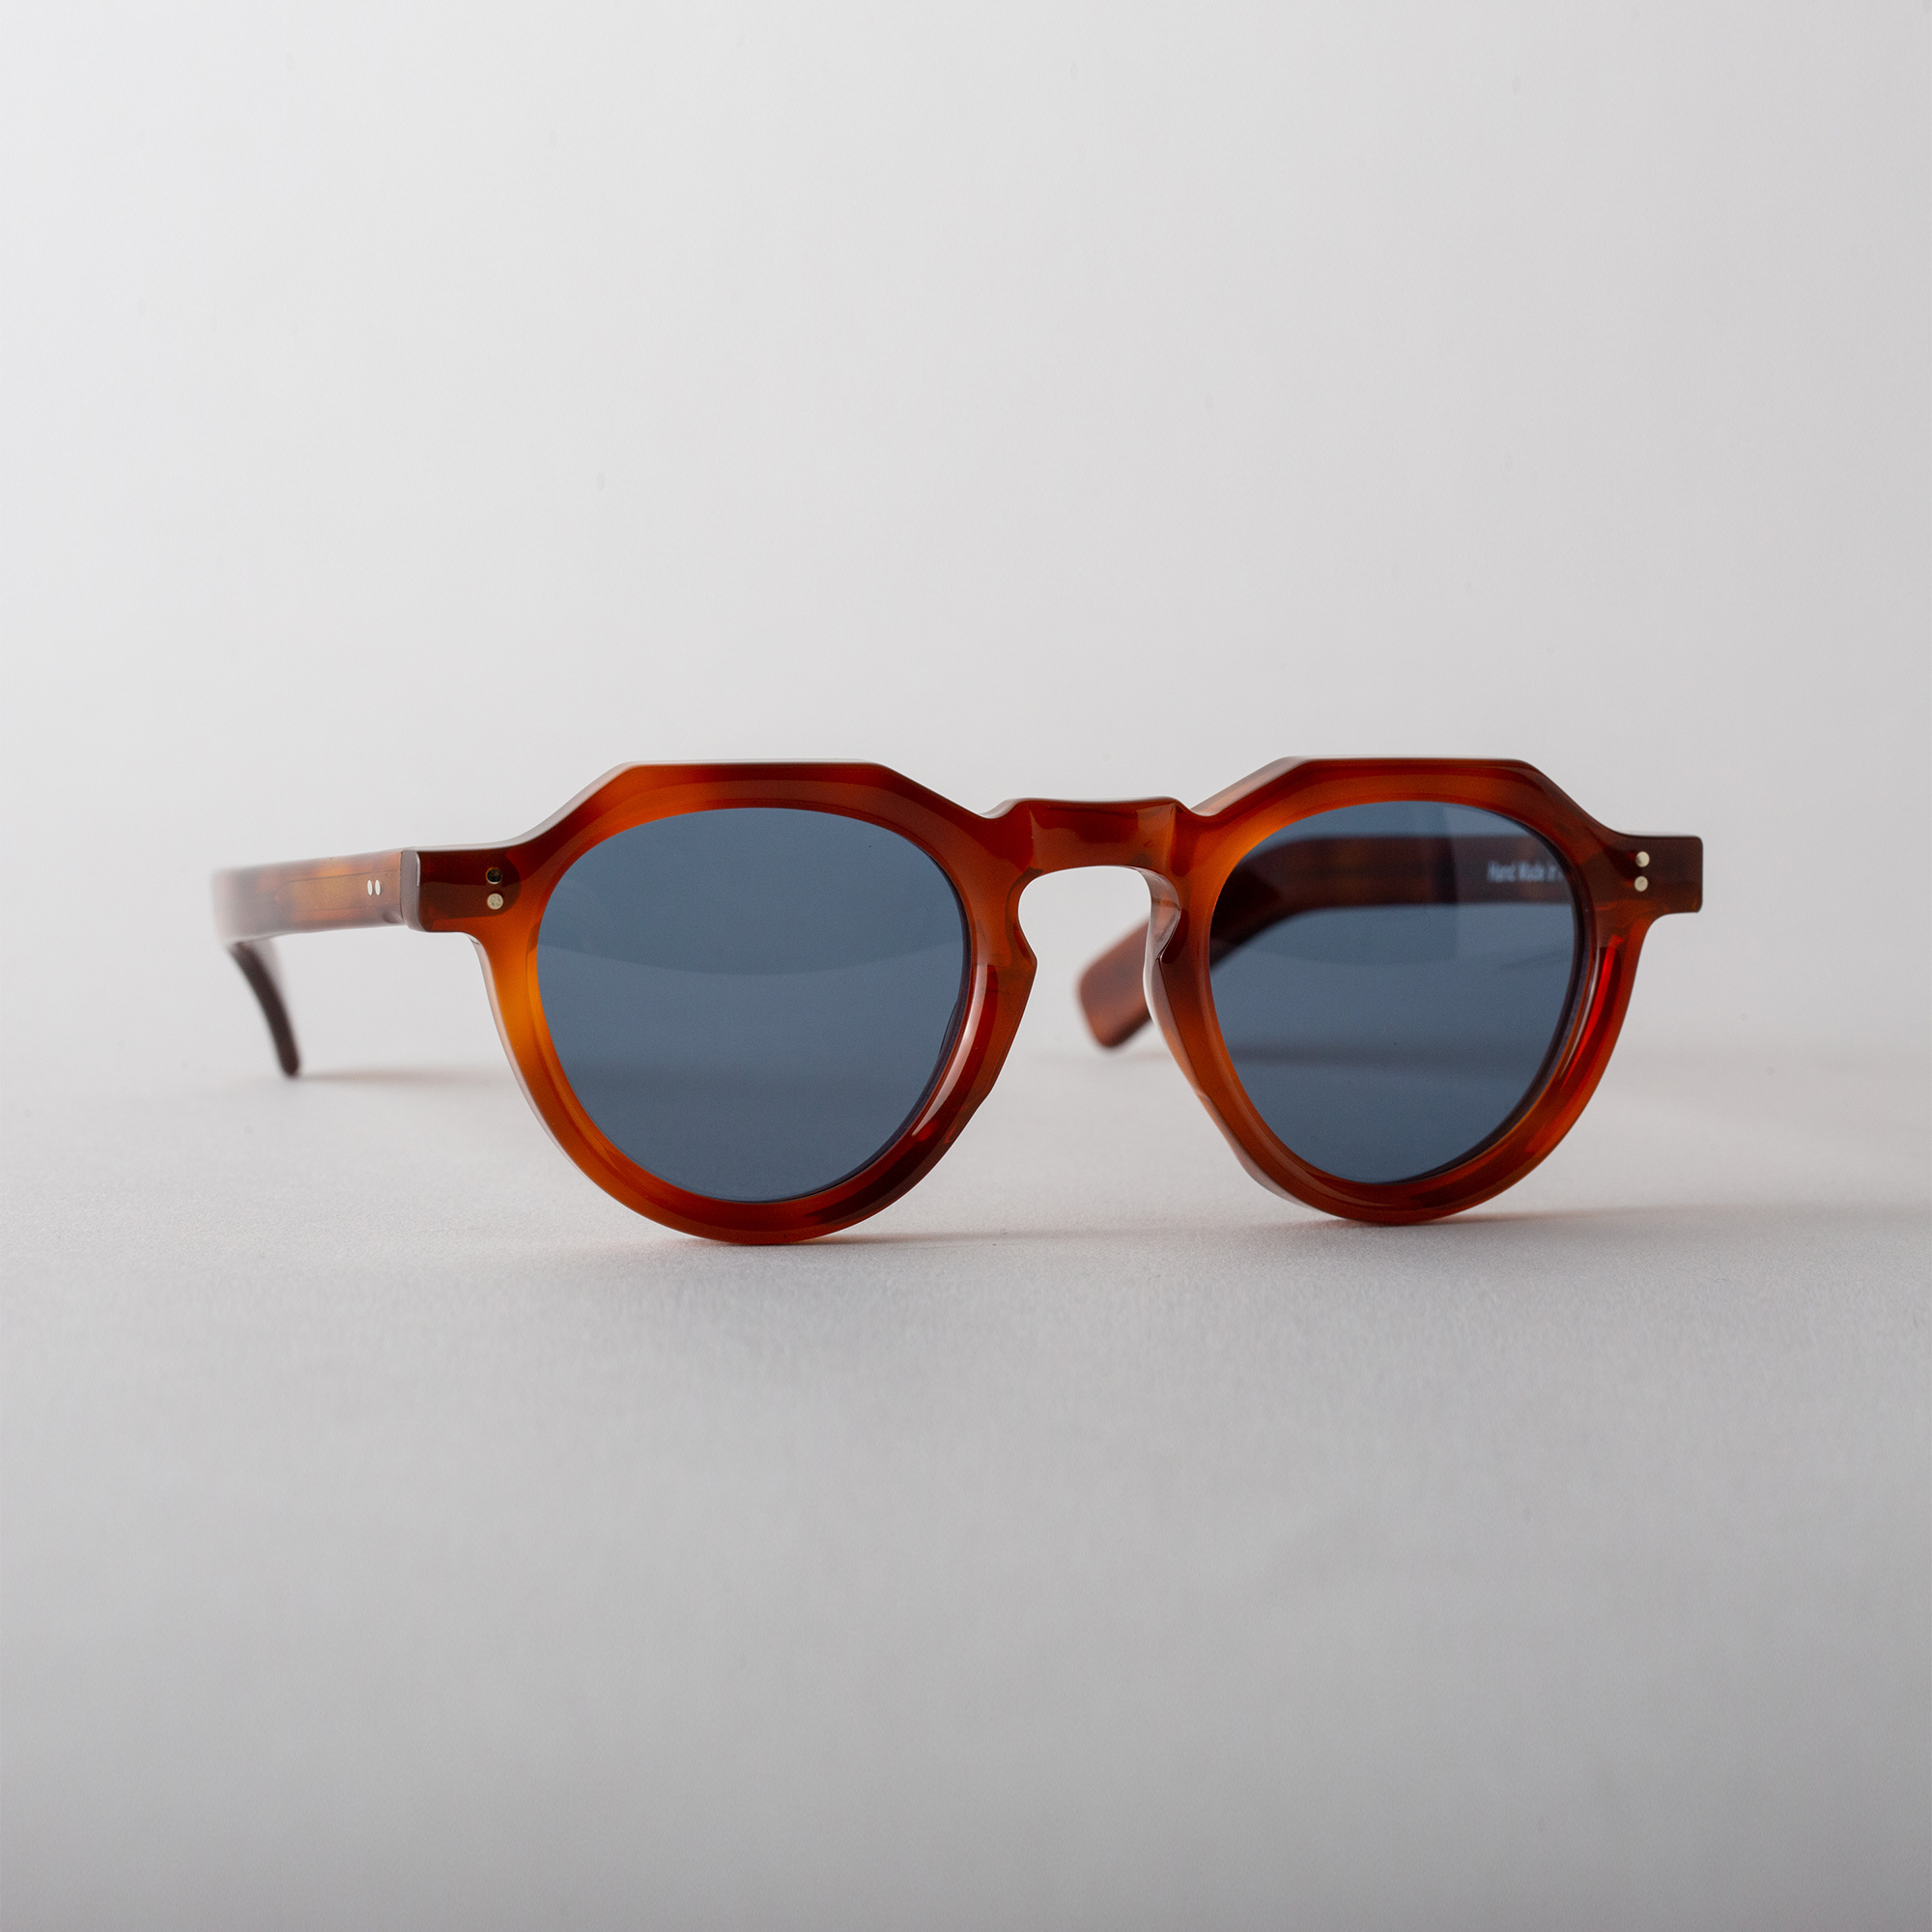 Sunglasses MOD.01 in Light Tortoise color by Arpenteur